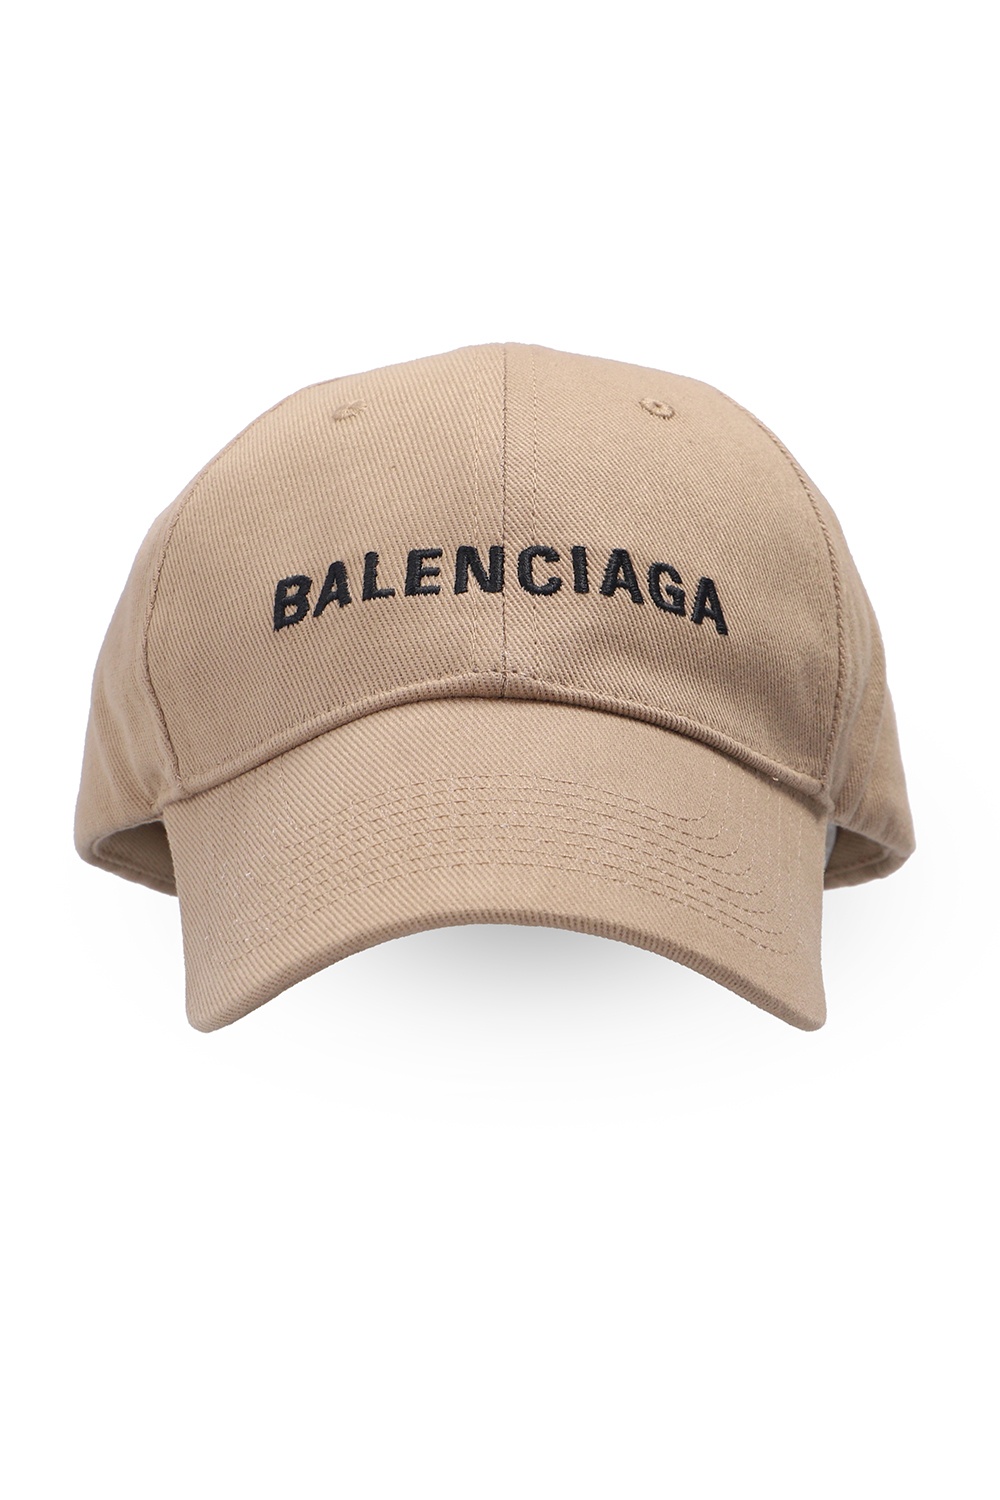 buffet Venture jeans Branded baseball cap Balenciaga - IetpShops US